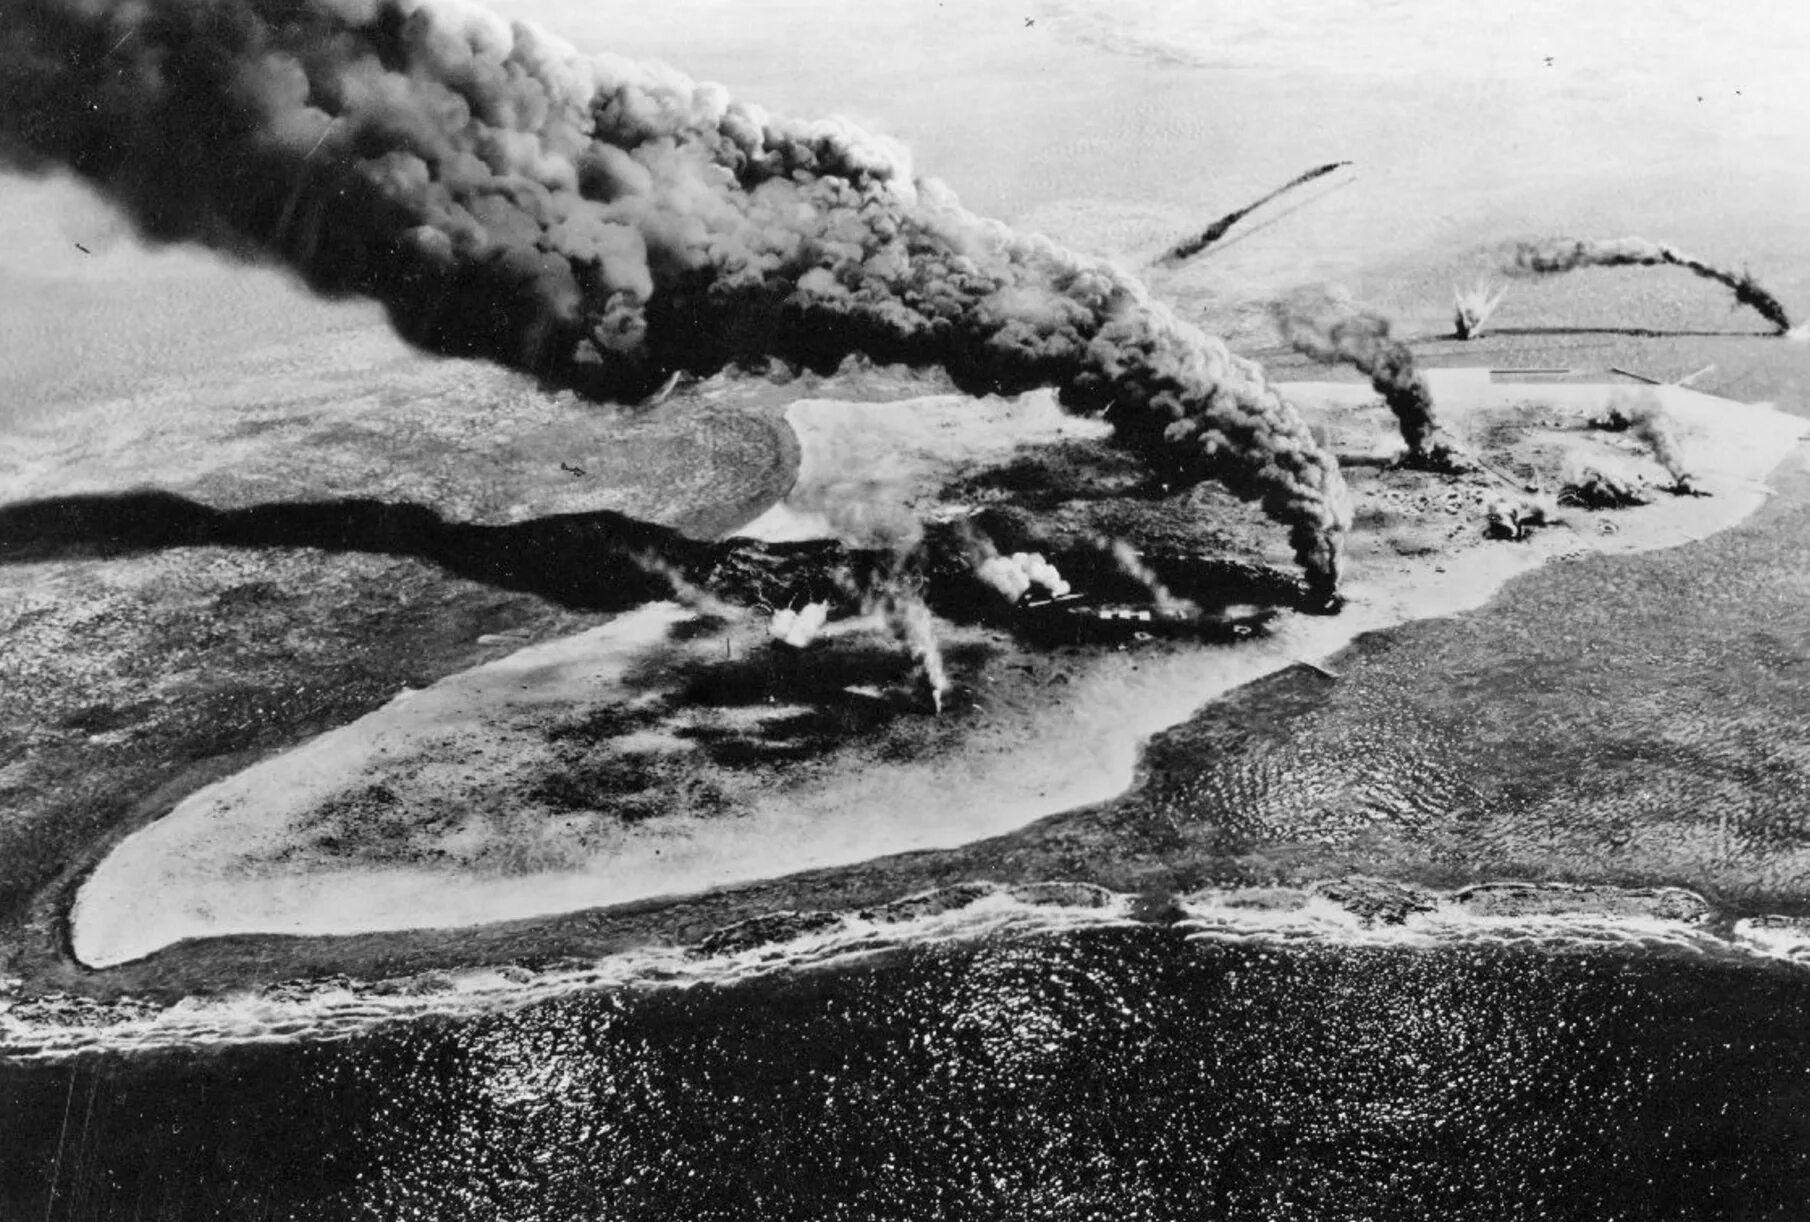 Нападение остров. Битва за Атолл Мидуэй 1942. Битва у атолла Мидуэй. Сражение у острова Мидуэй. Битва за Мидуэй, 4—7 июня 1942 года.